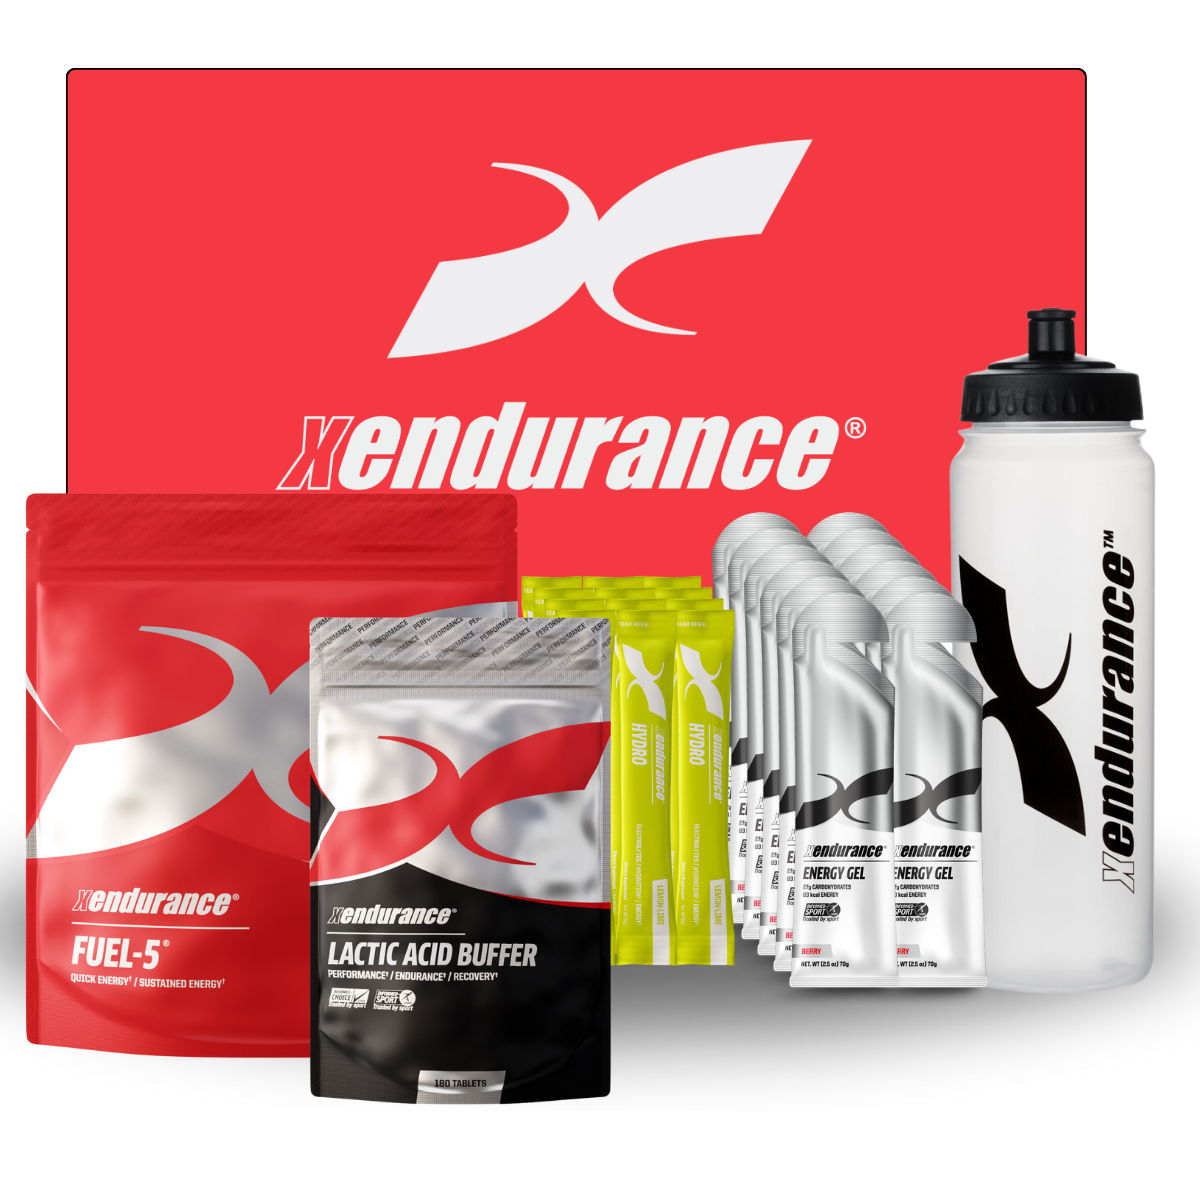 Endurance Bundle - Lactic acid buffer, Fuel-5, Hydro Sticks, Bottle + FREE GELS